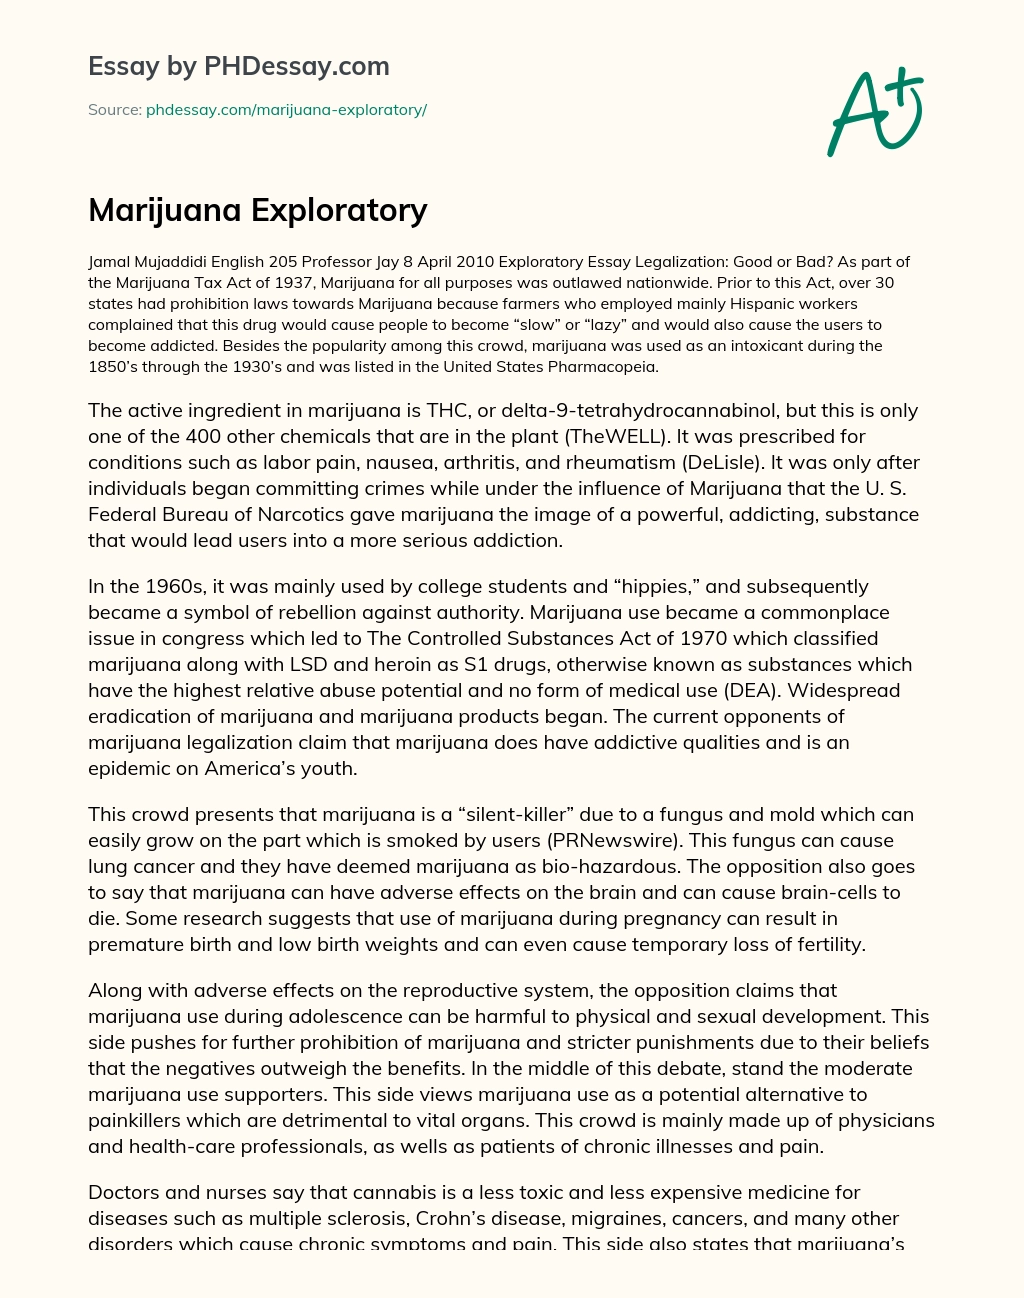 Marijuana Exploratory